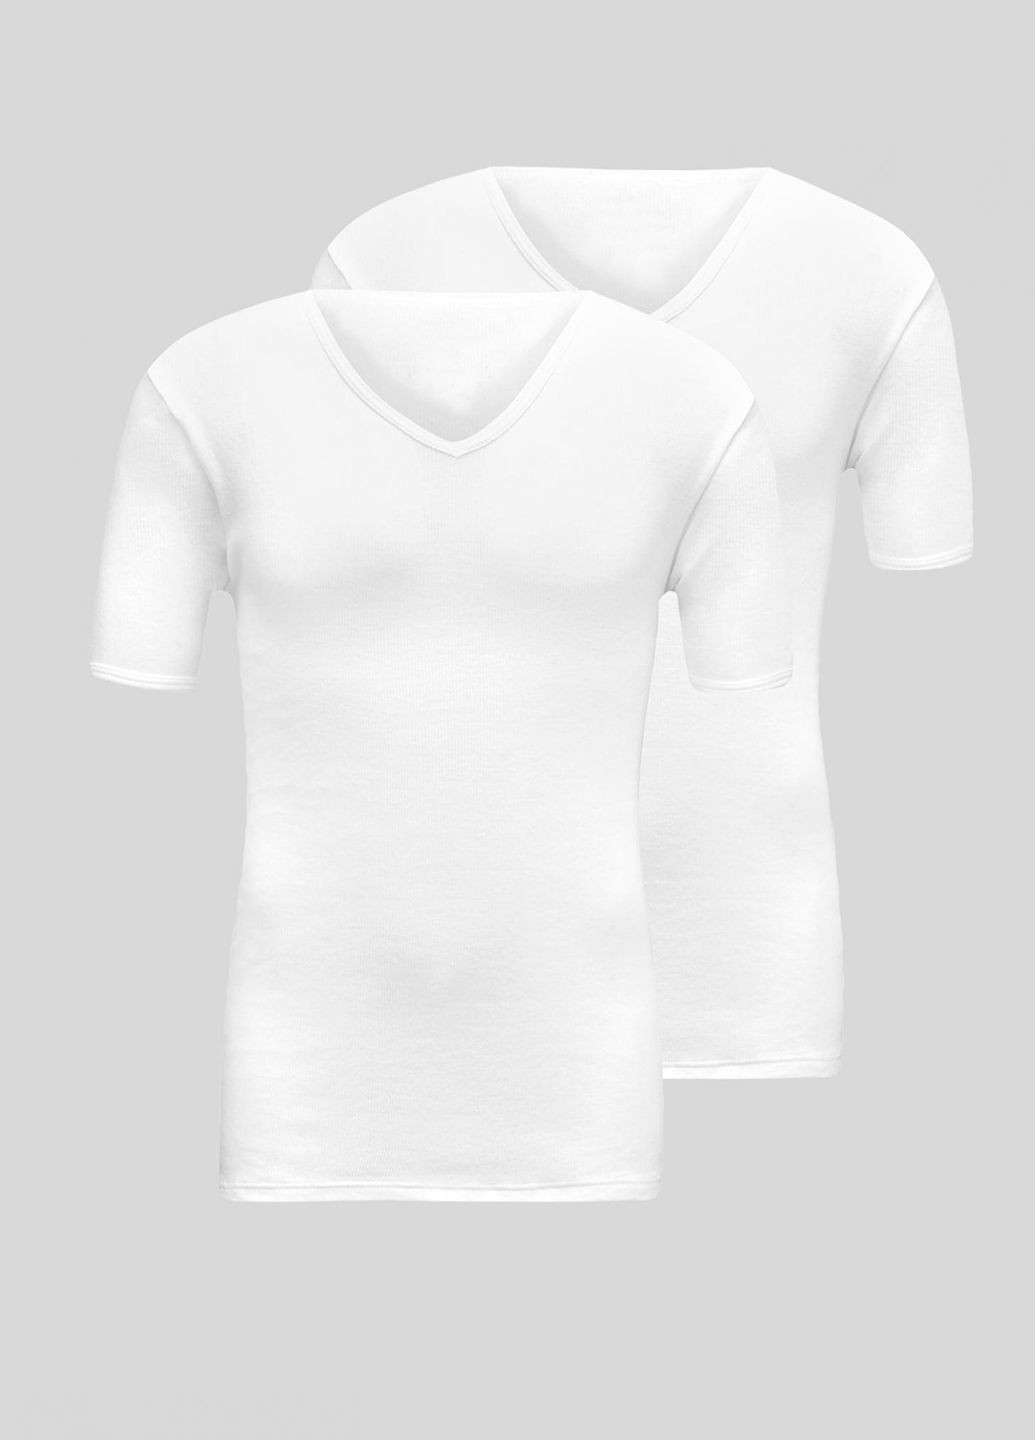 Біла комплект футболок у рубчик (2шт) C&A